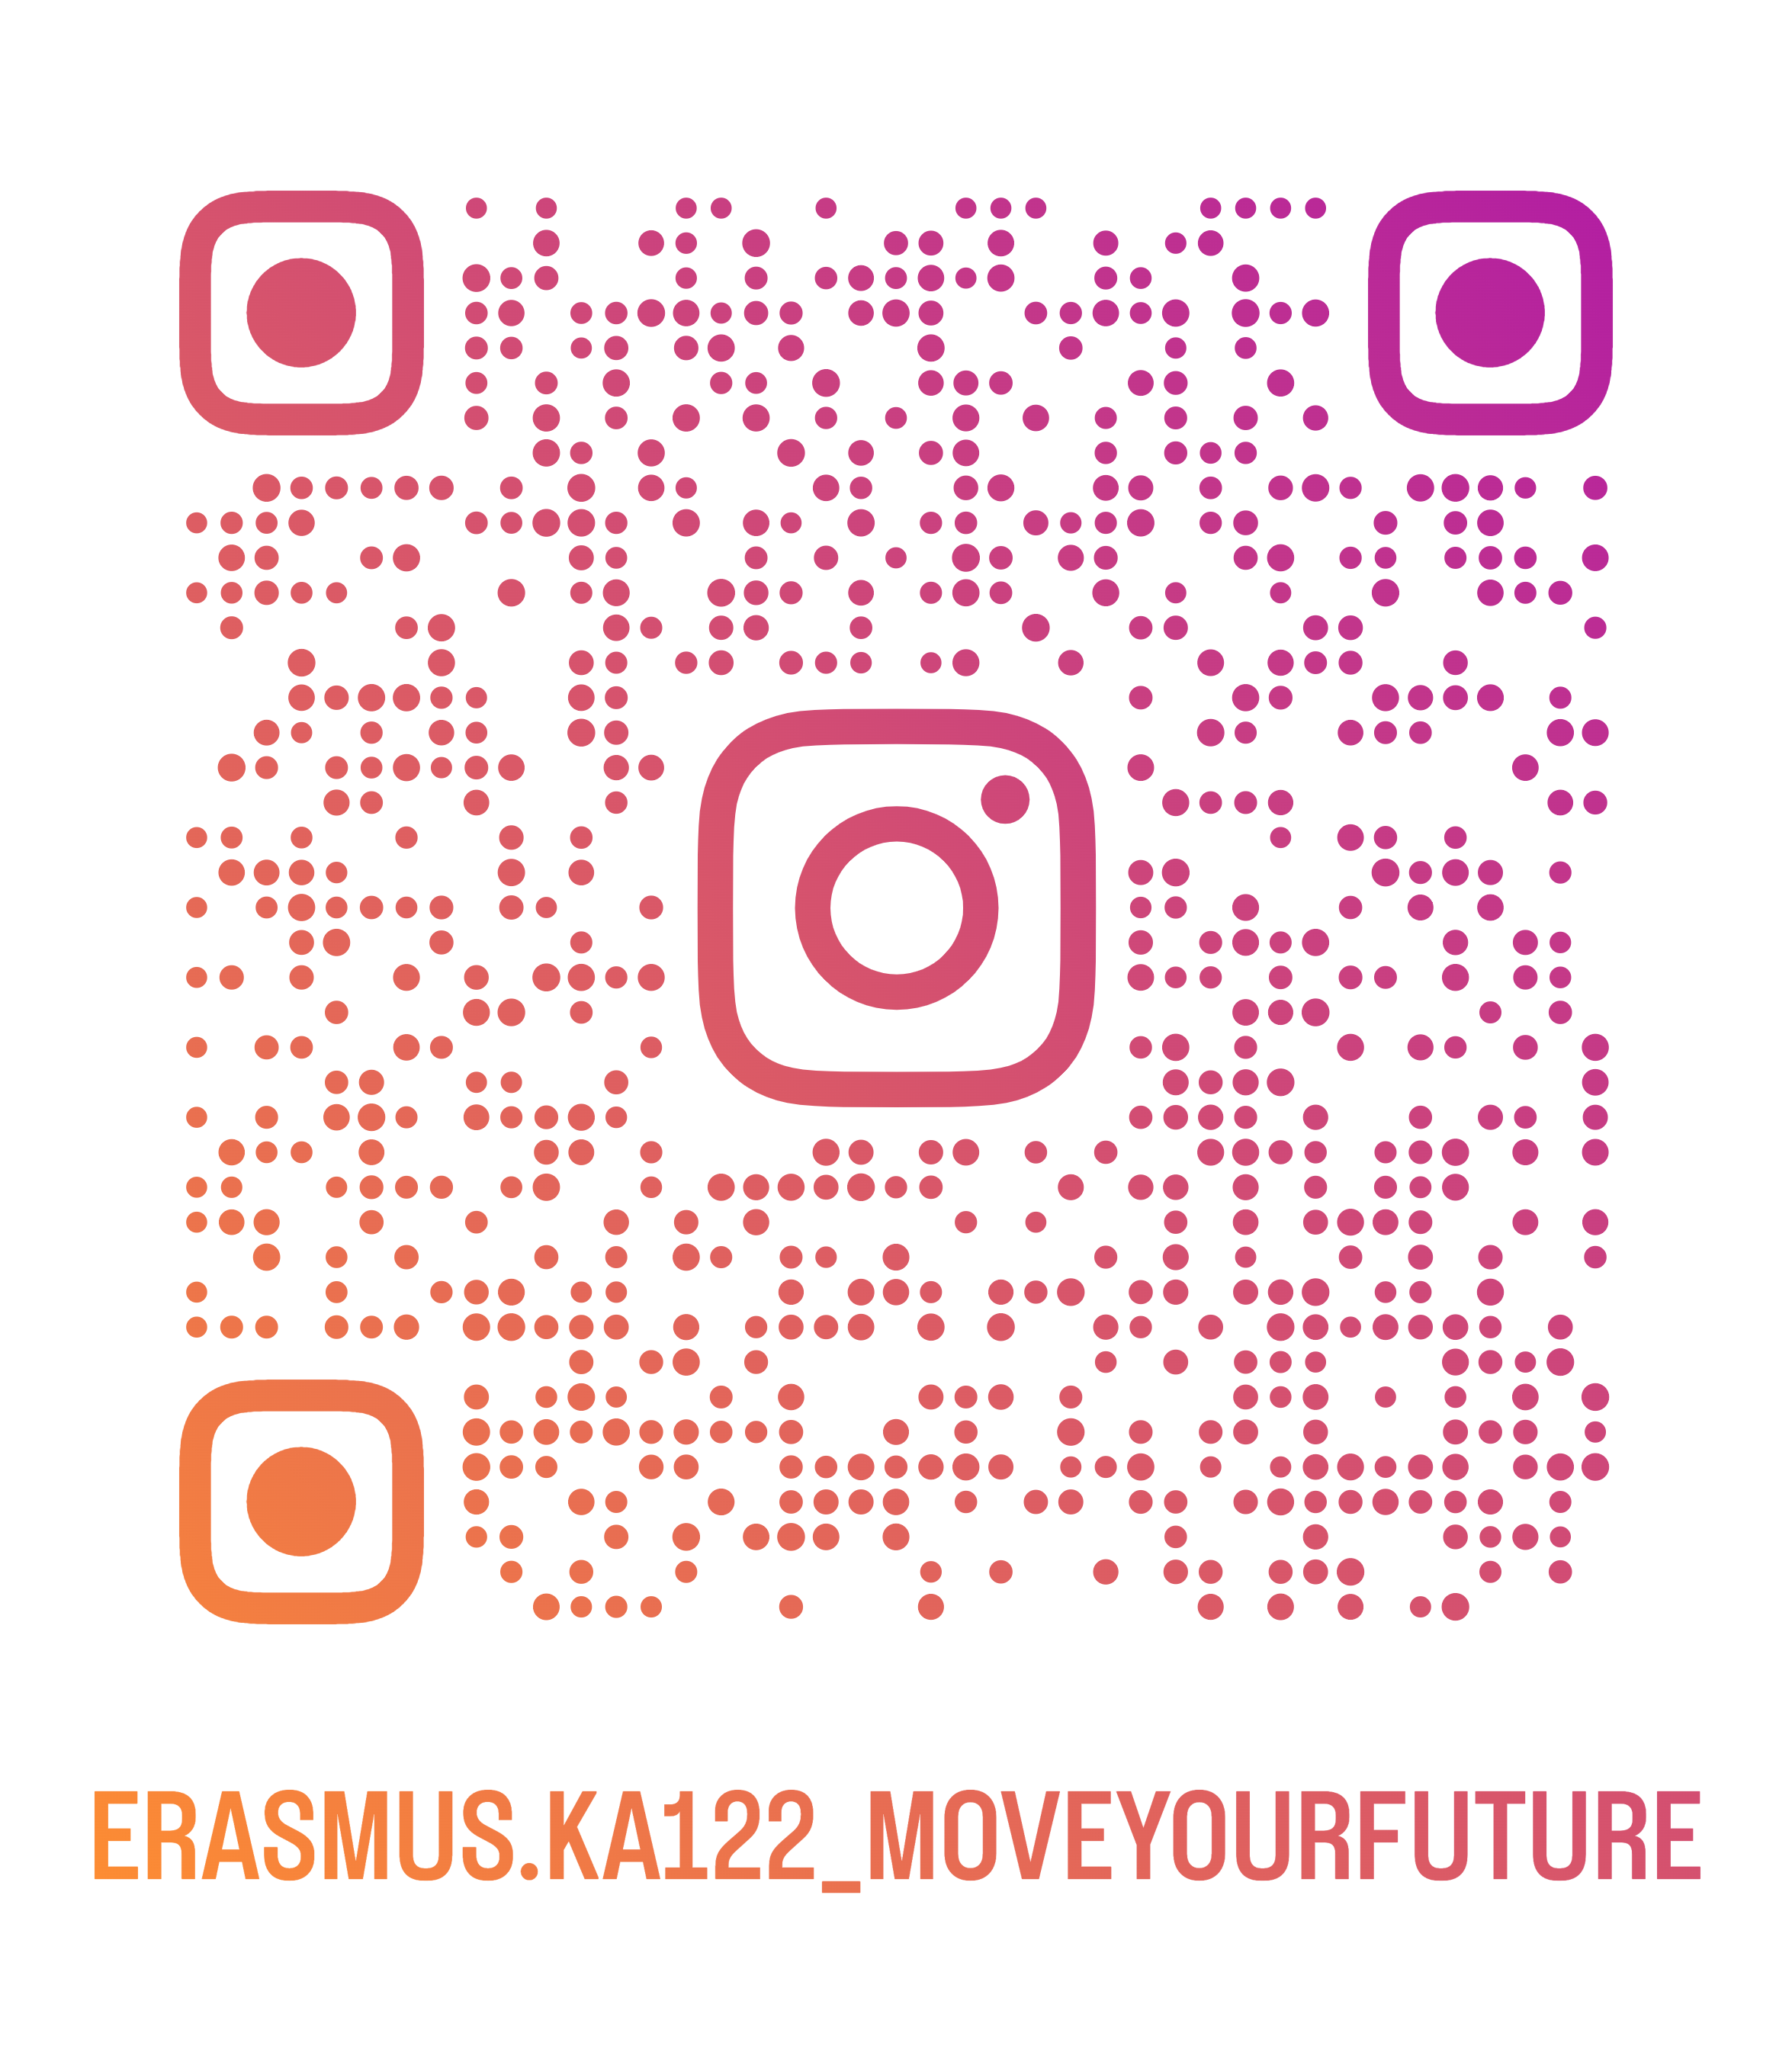 erasmus.ka122_moveyourfuture_qr.png (1.05 MB)